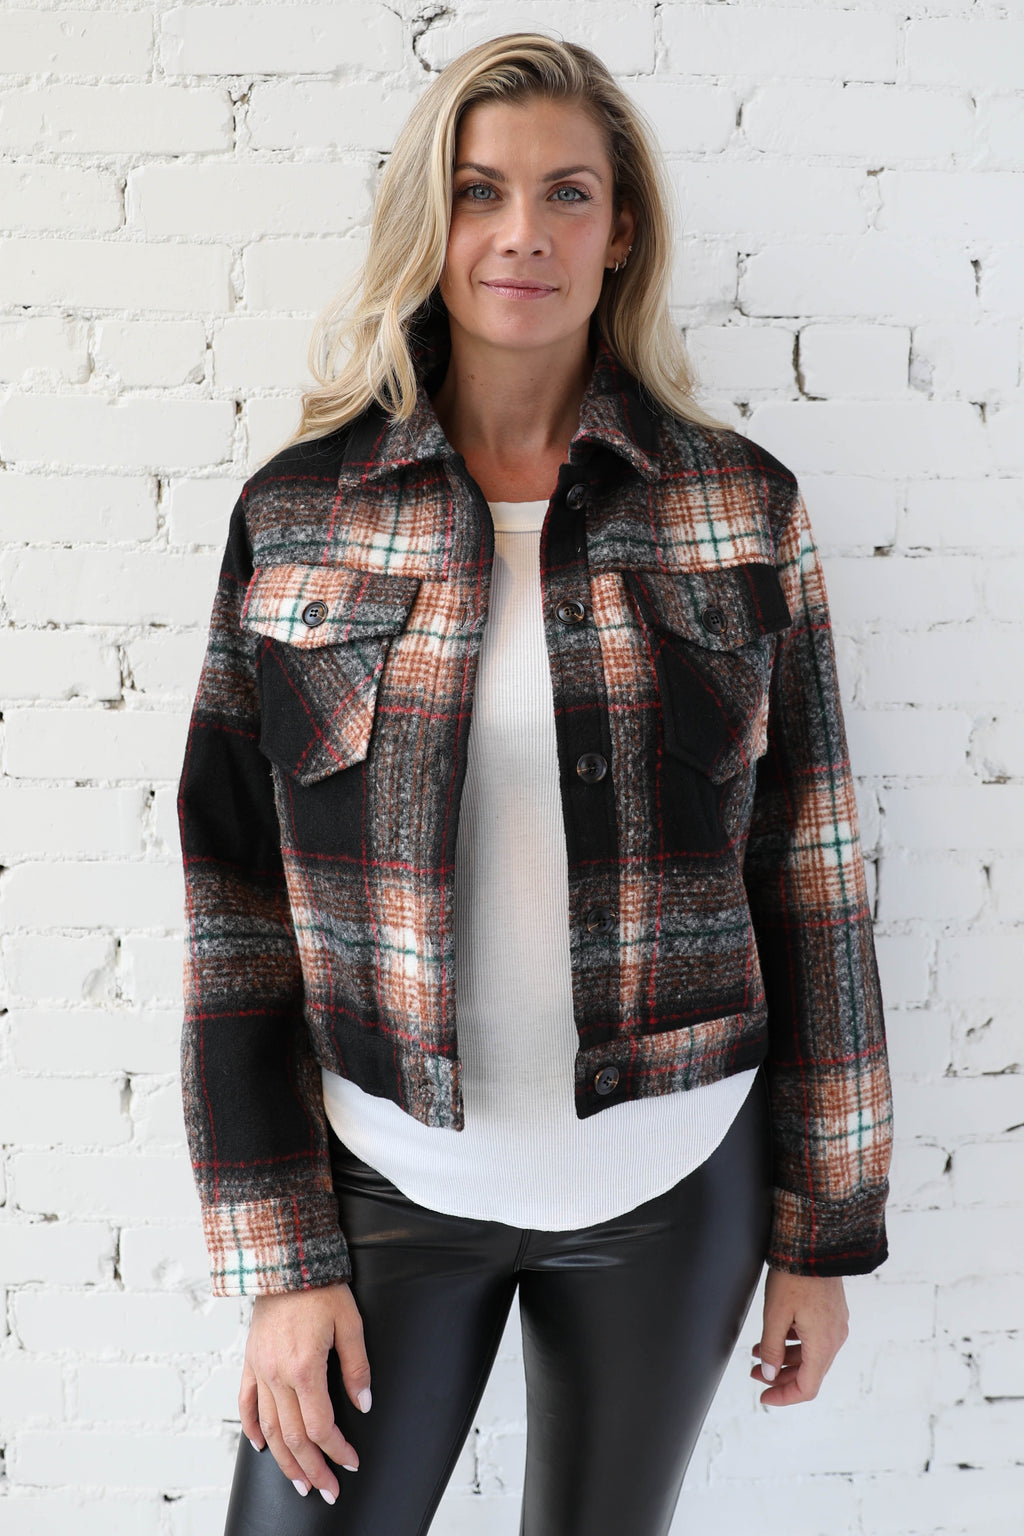 Women's Coats and Jackets | Parpar Clothing Boutique Toronto – Page 2